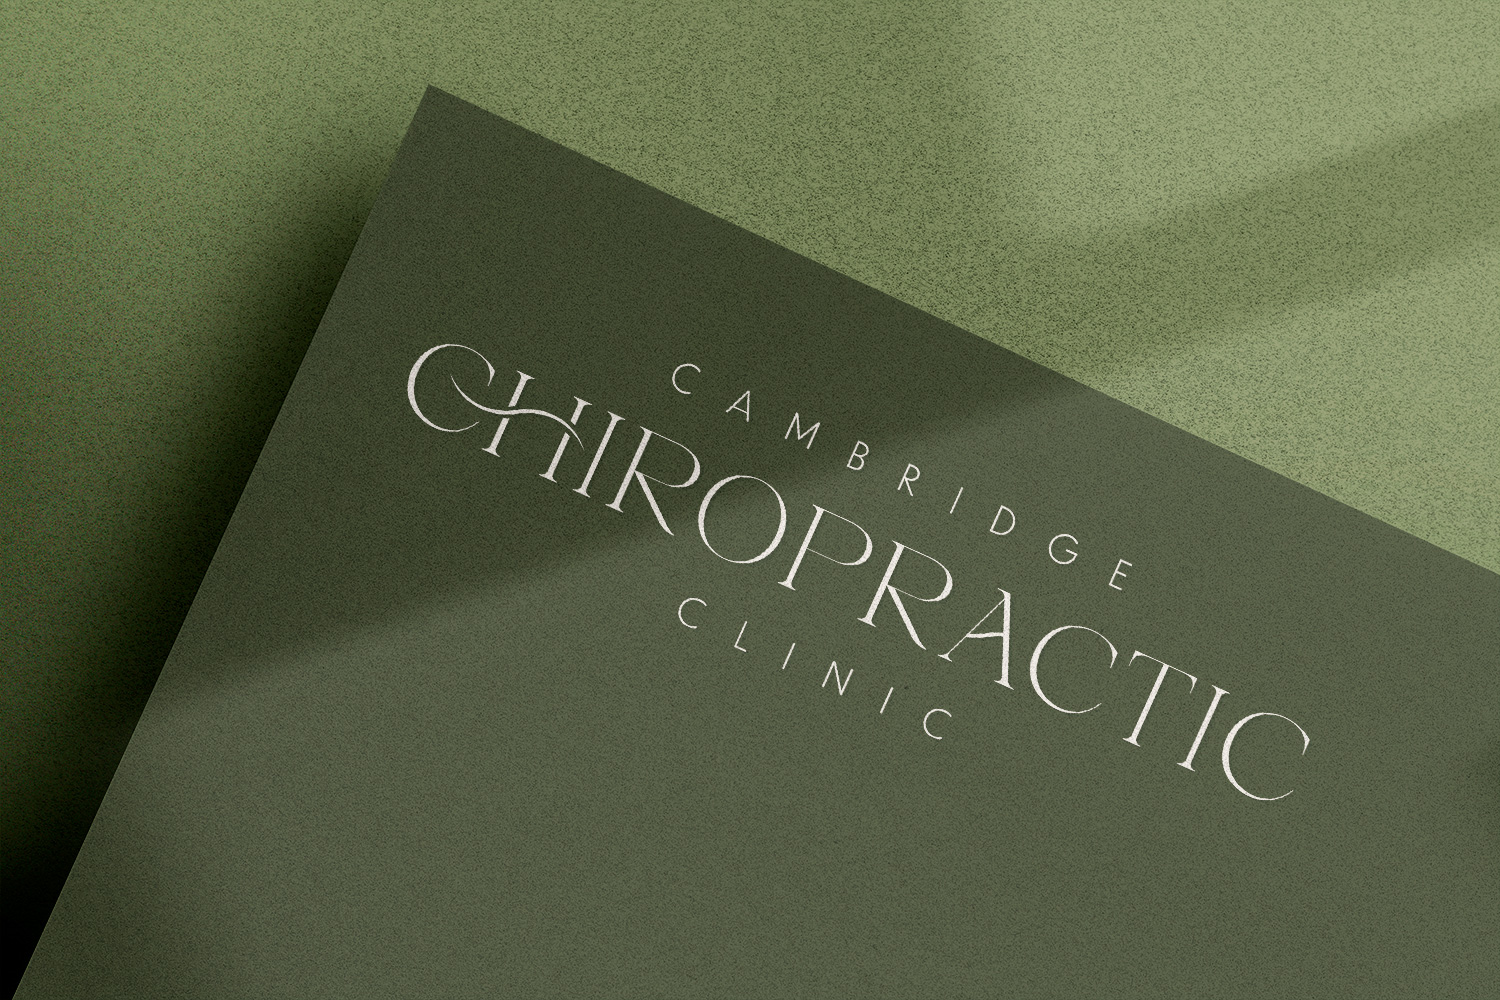 cambridge chiropractic clinic logo design, Ashleigh May Design